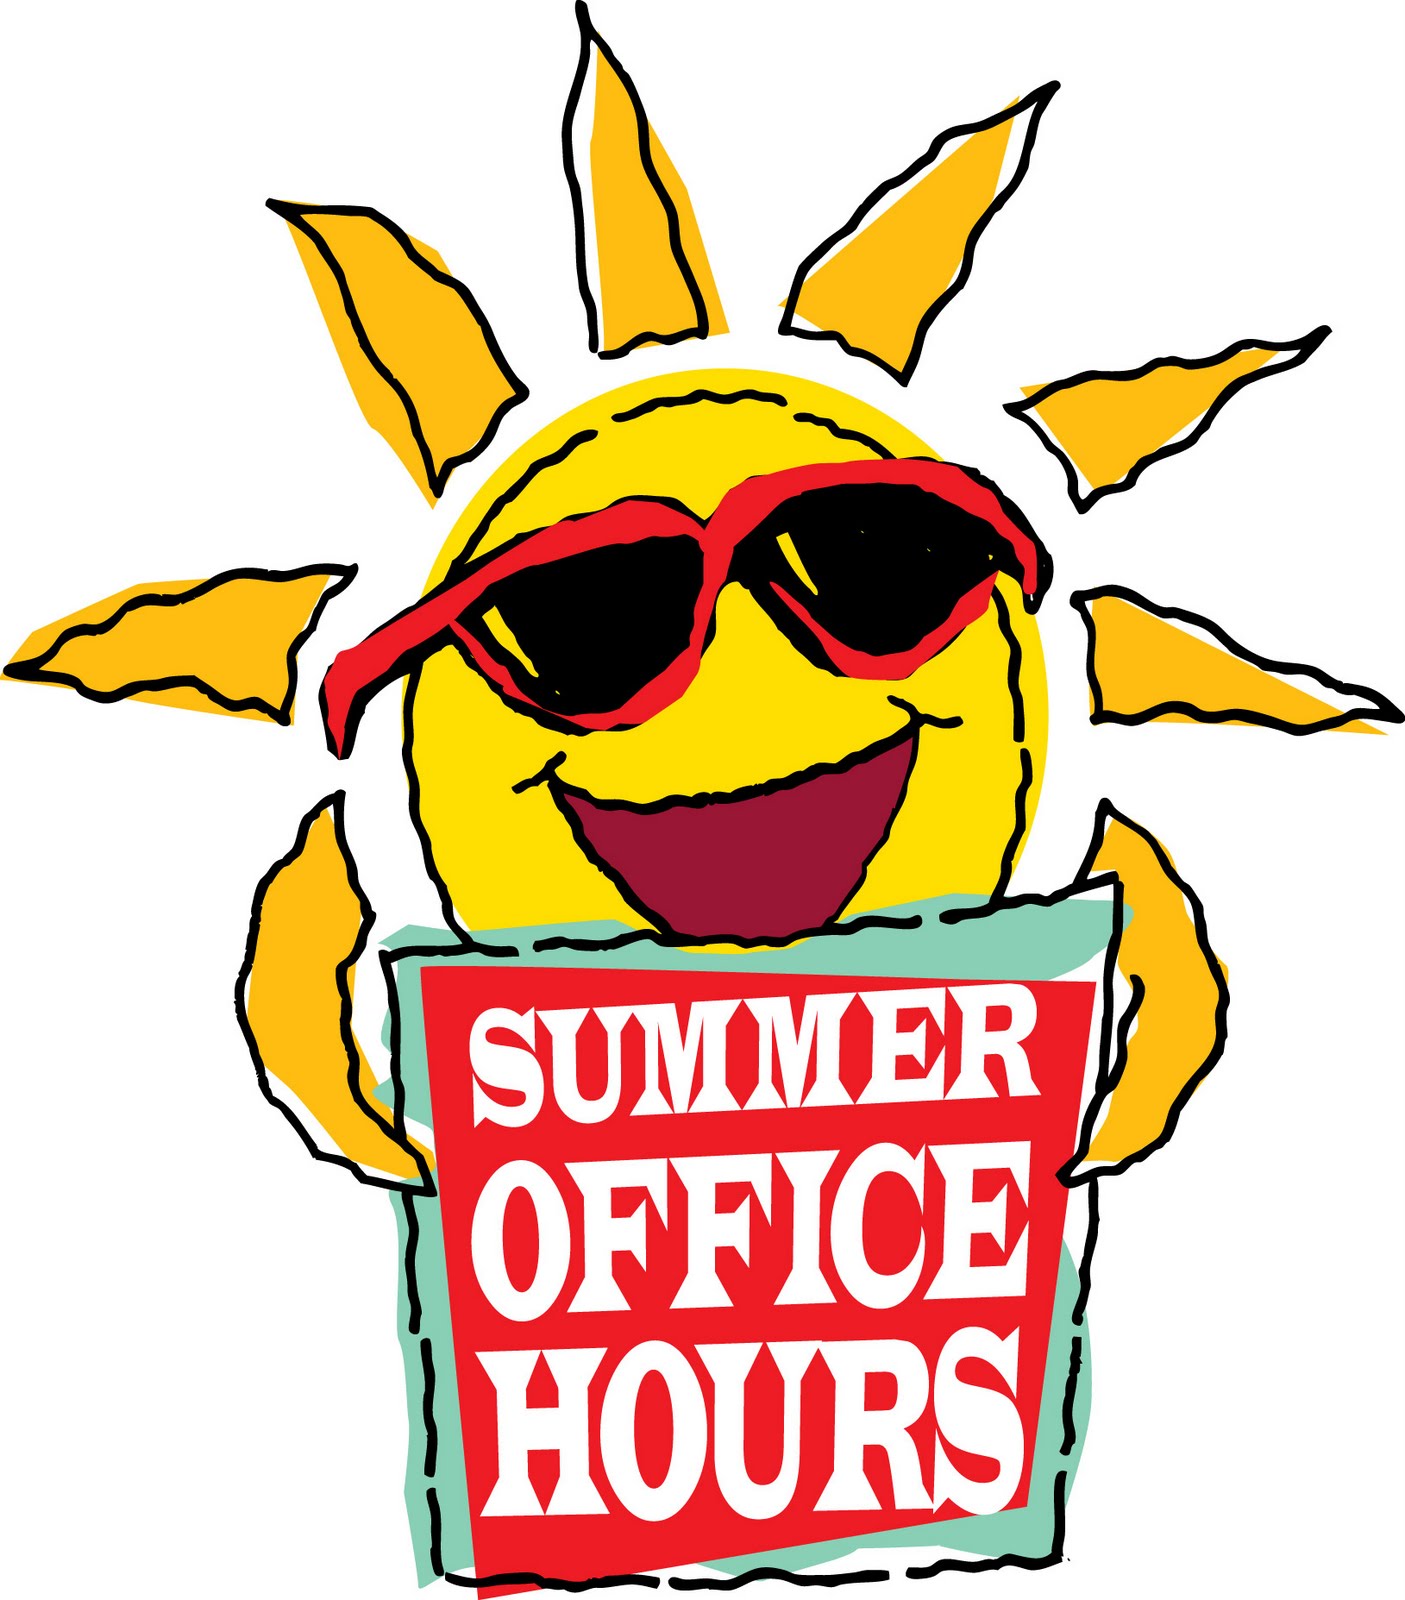 Summer office hours clipart jpg